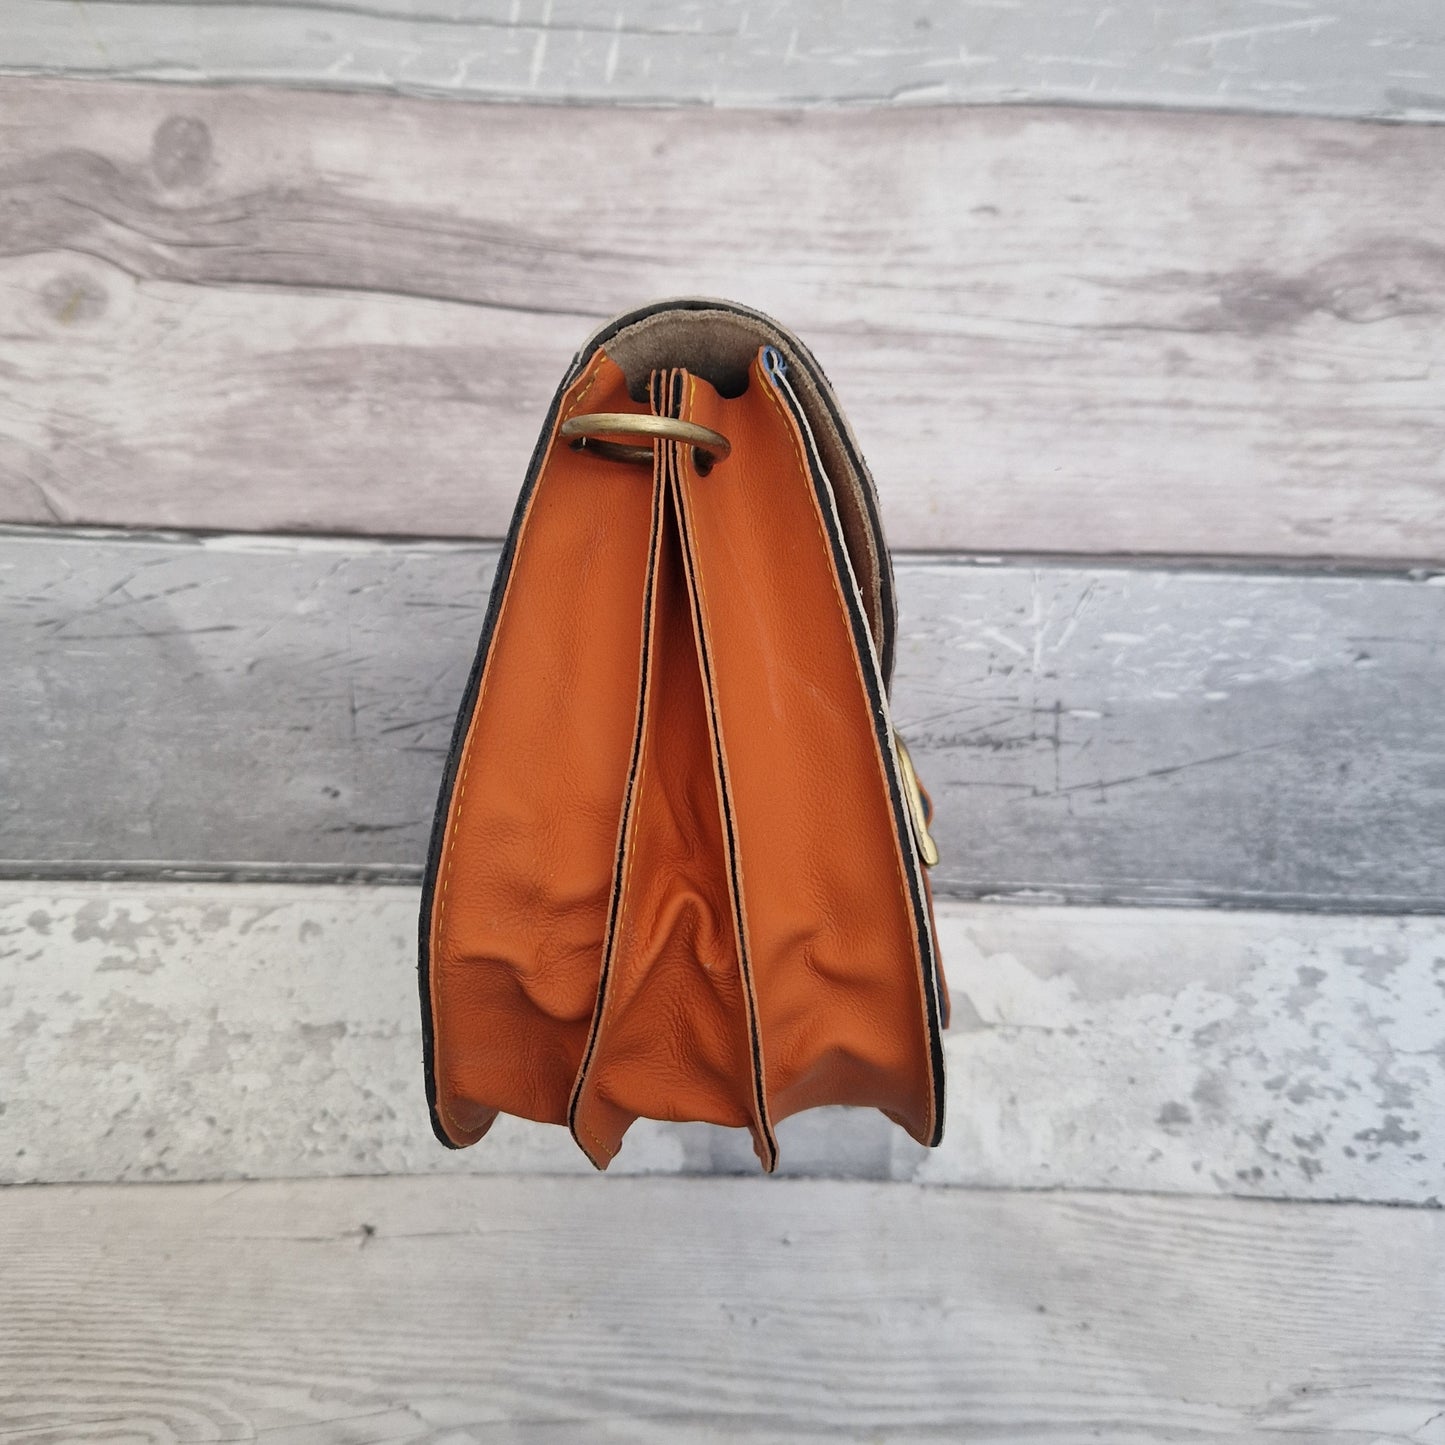 Orange leather handbag with a textured animal print panel.